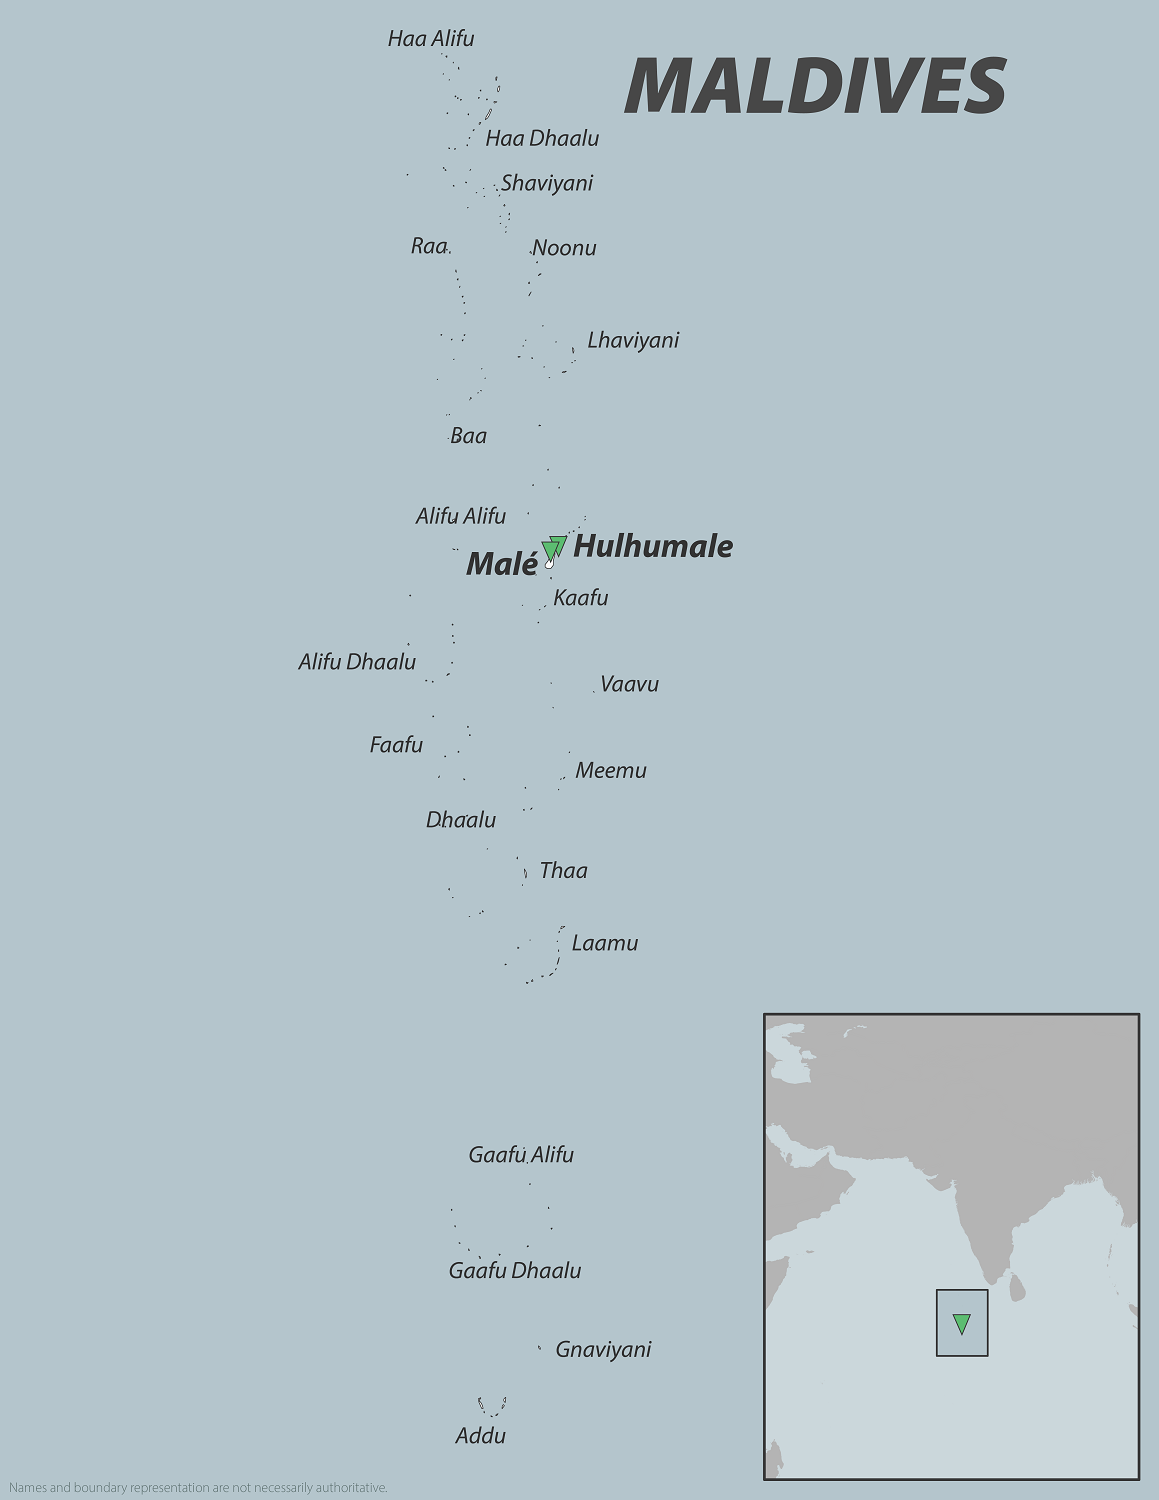 Map: Green indicates chikungunya outbreak areas in Maldives